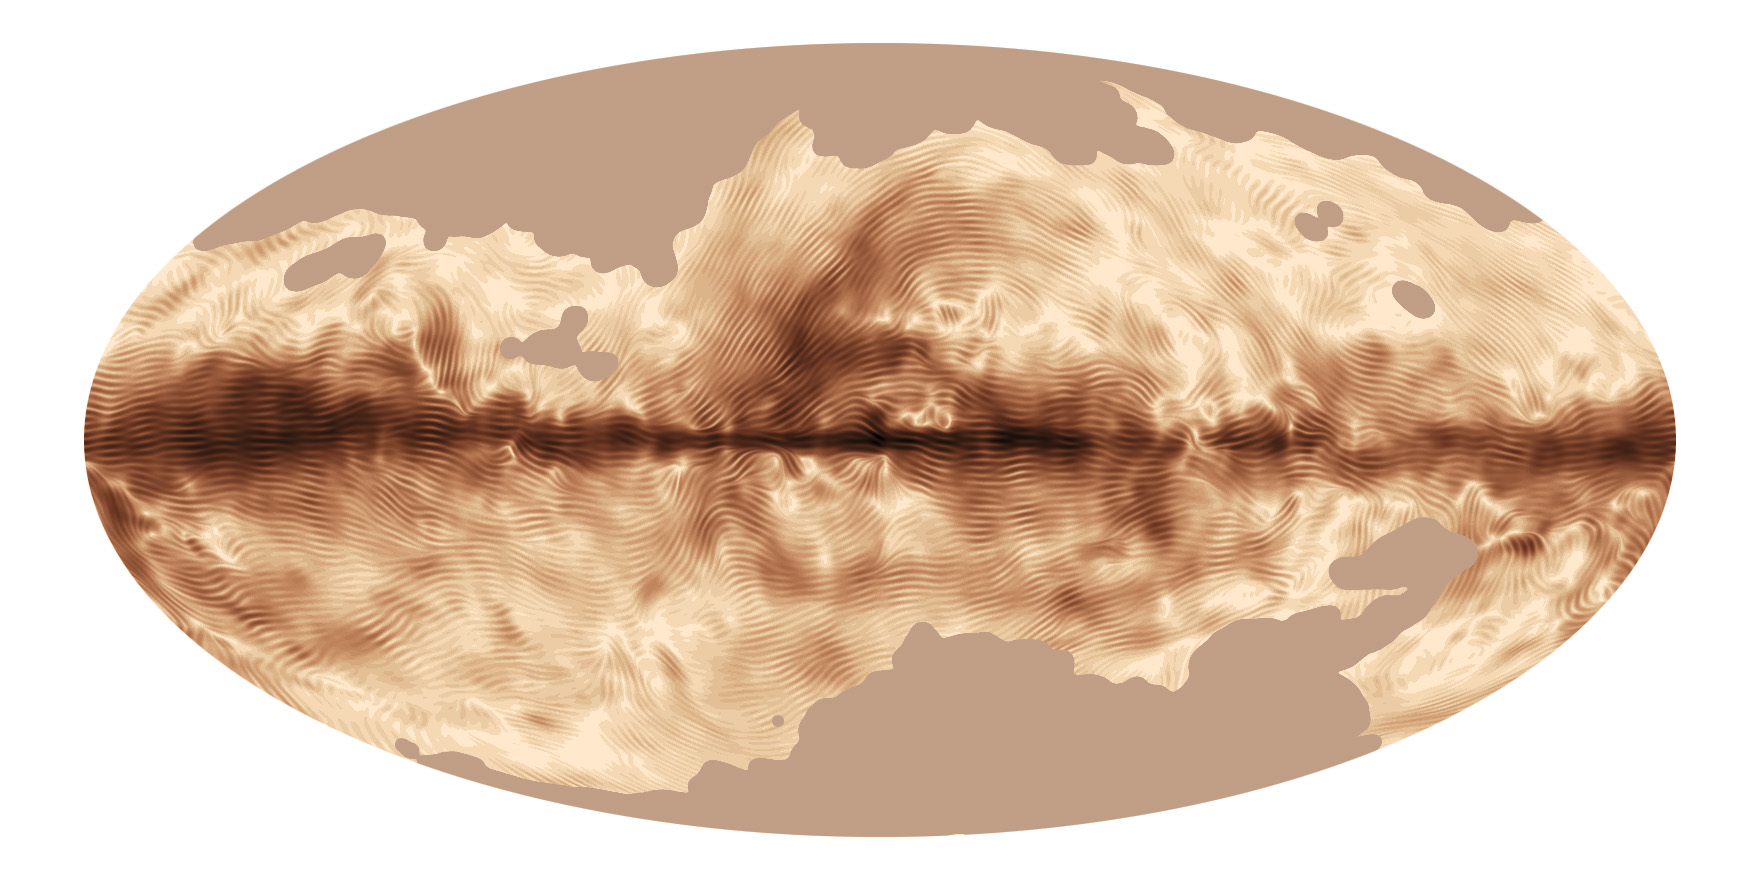 Planck Space Telescope Reveals Magnetic Fingerprint of Our Galaxy